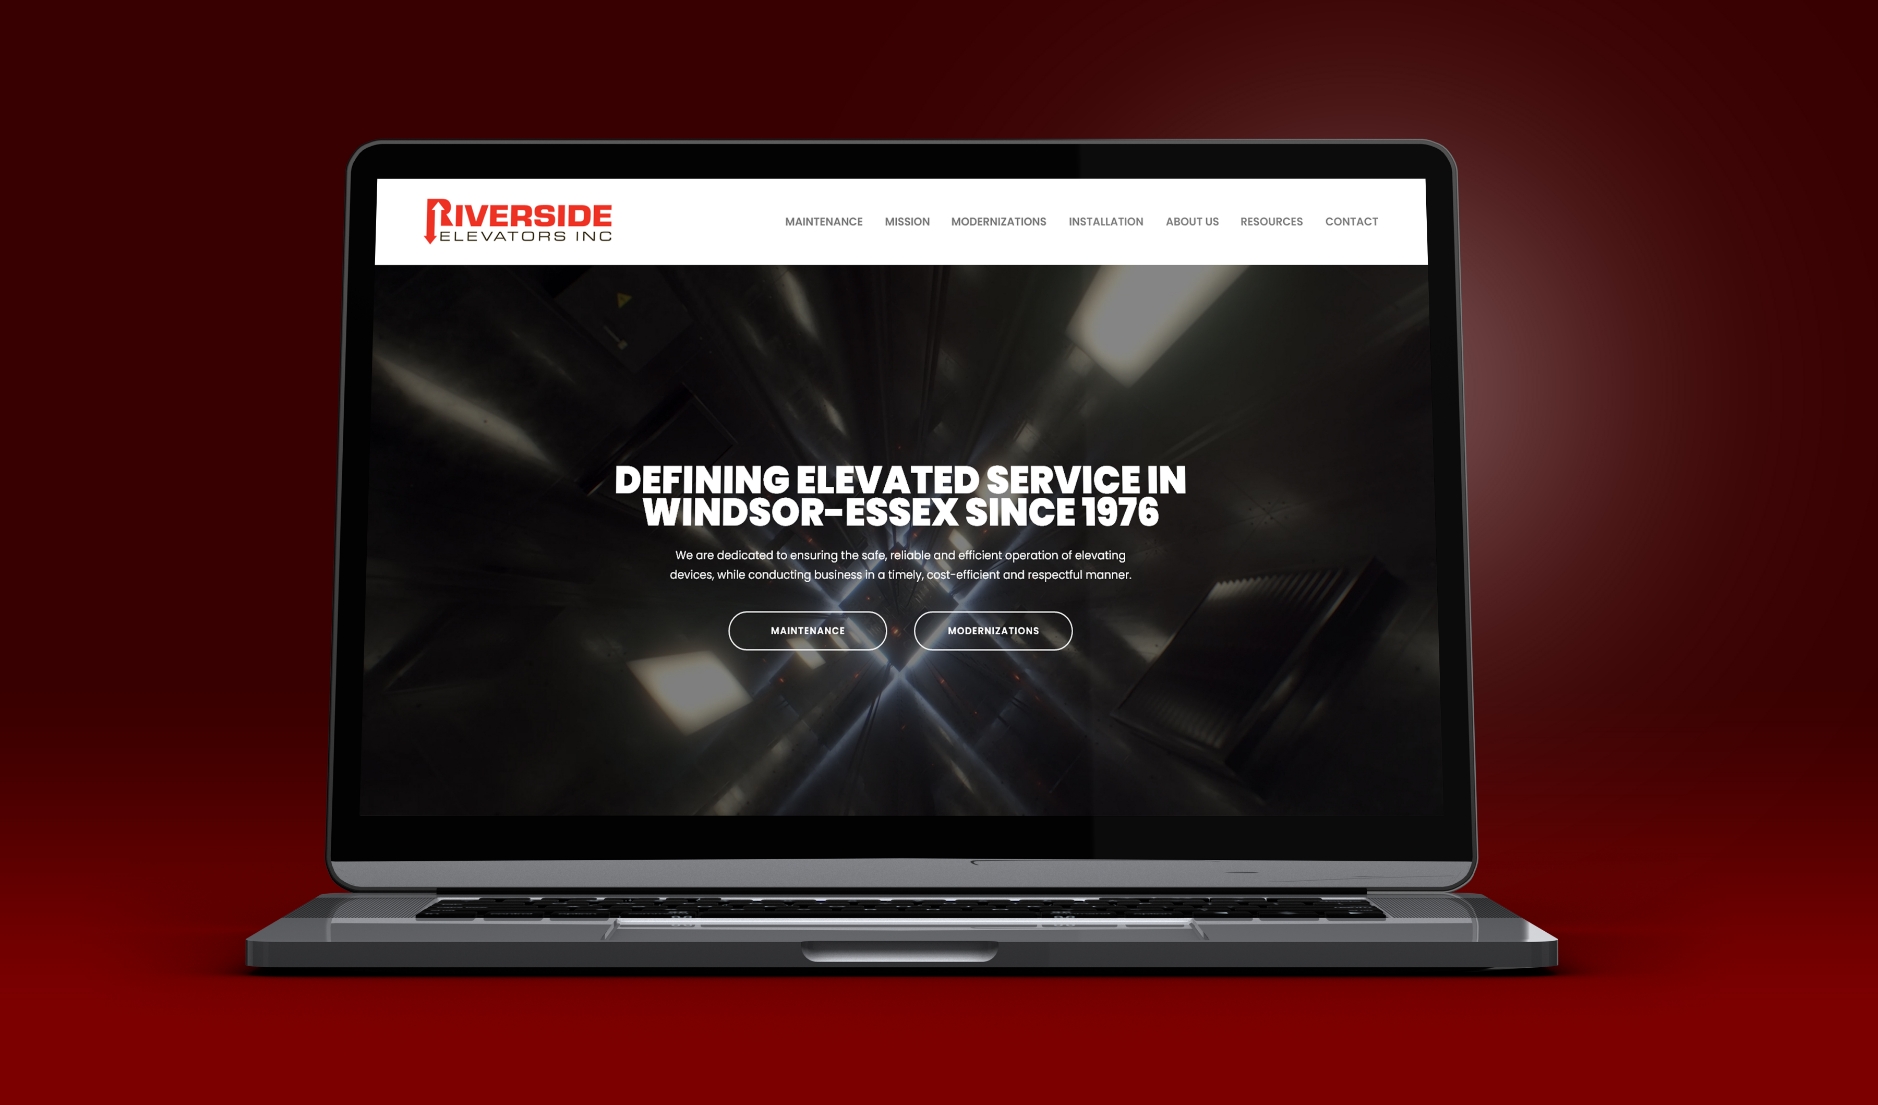 Riverside Elevators homepage displayed on a laptop screen